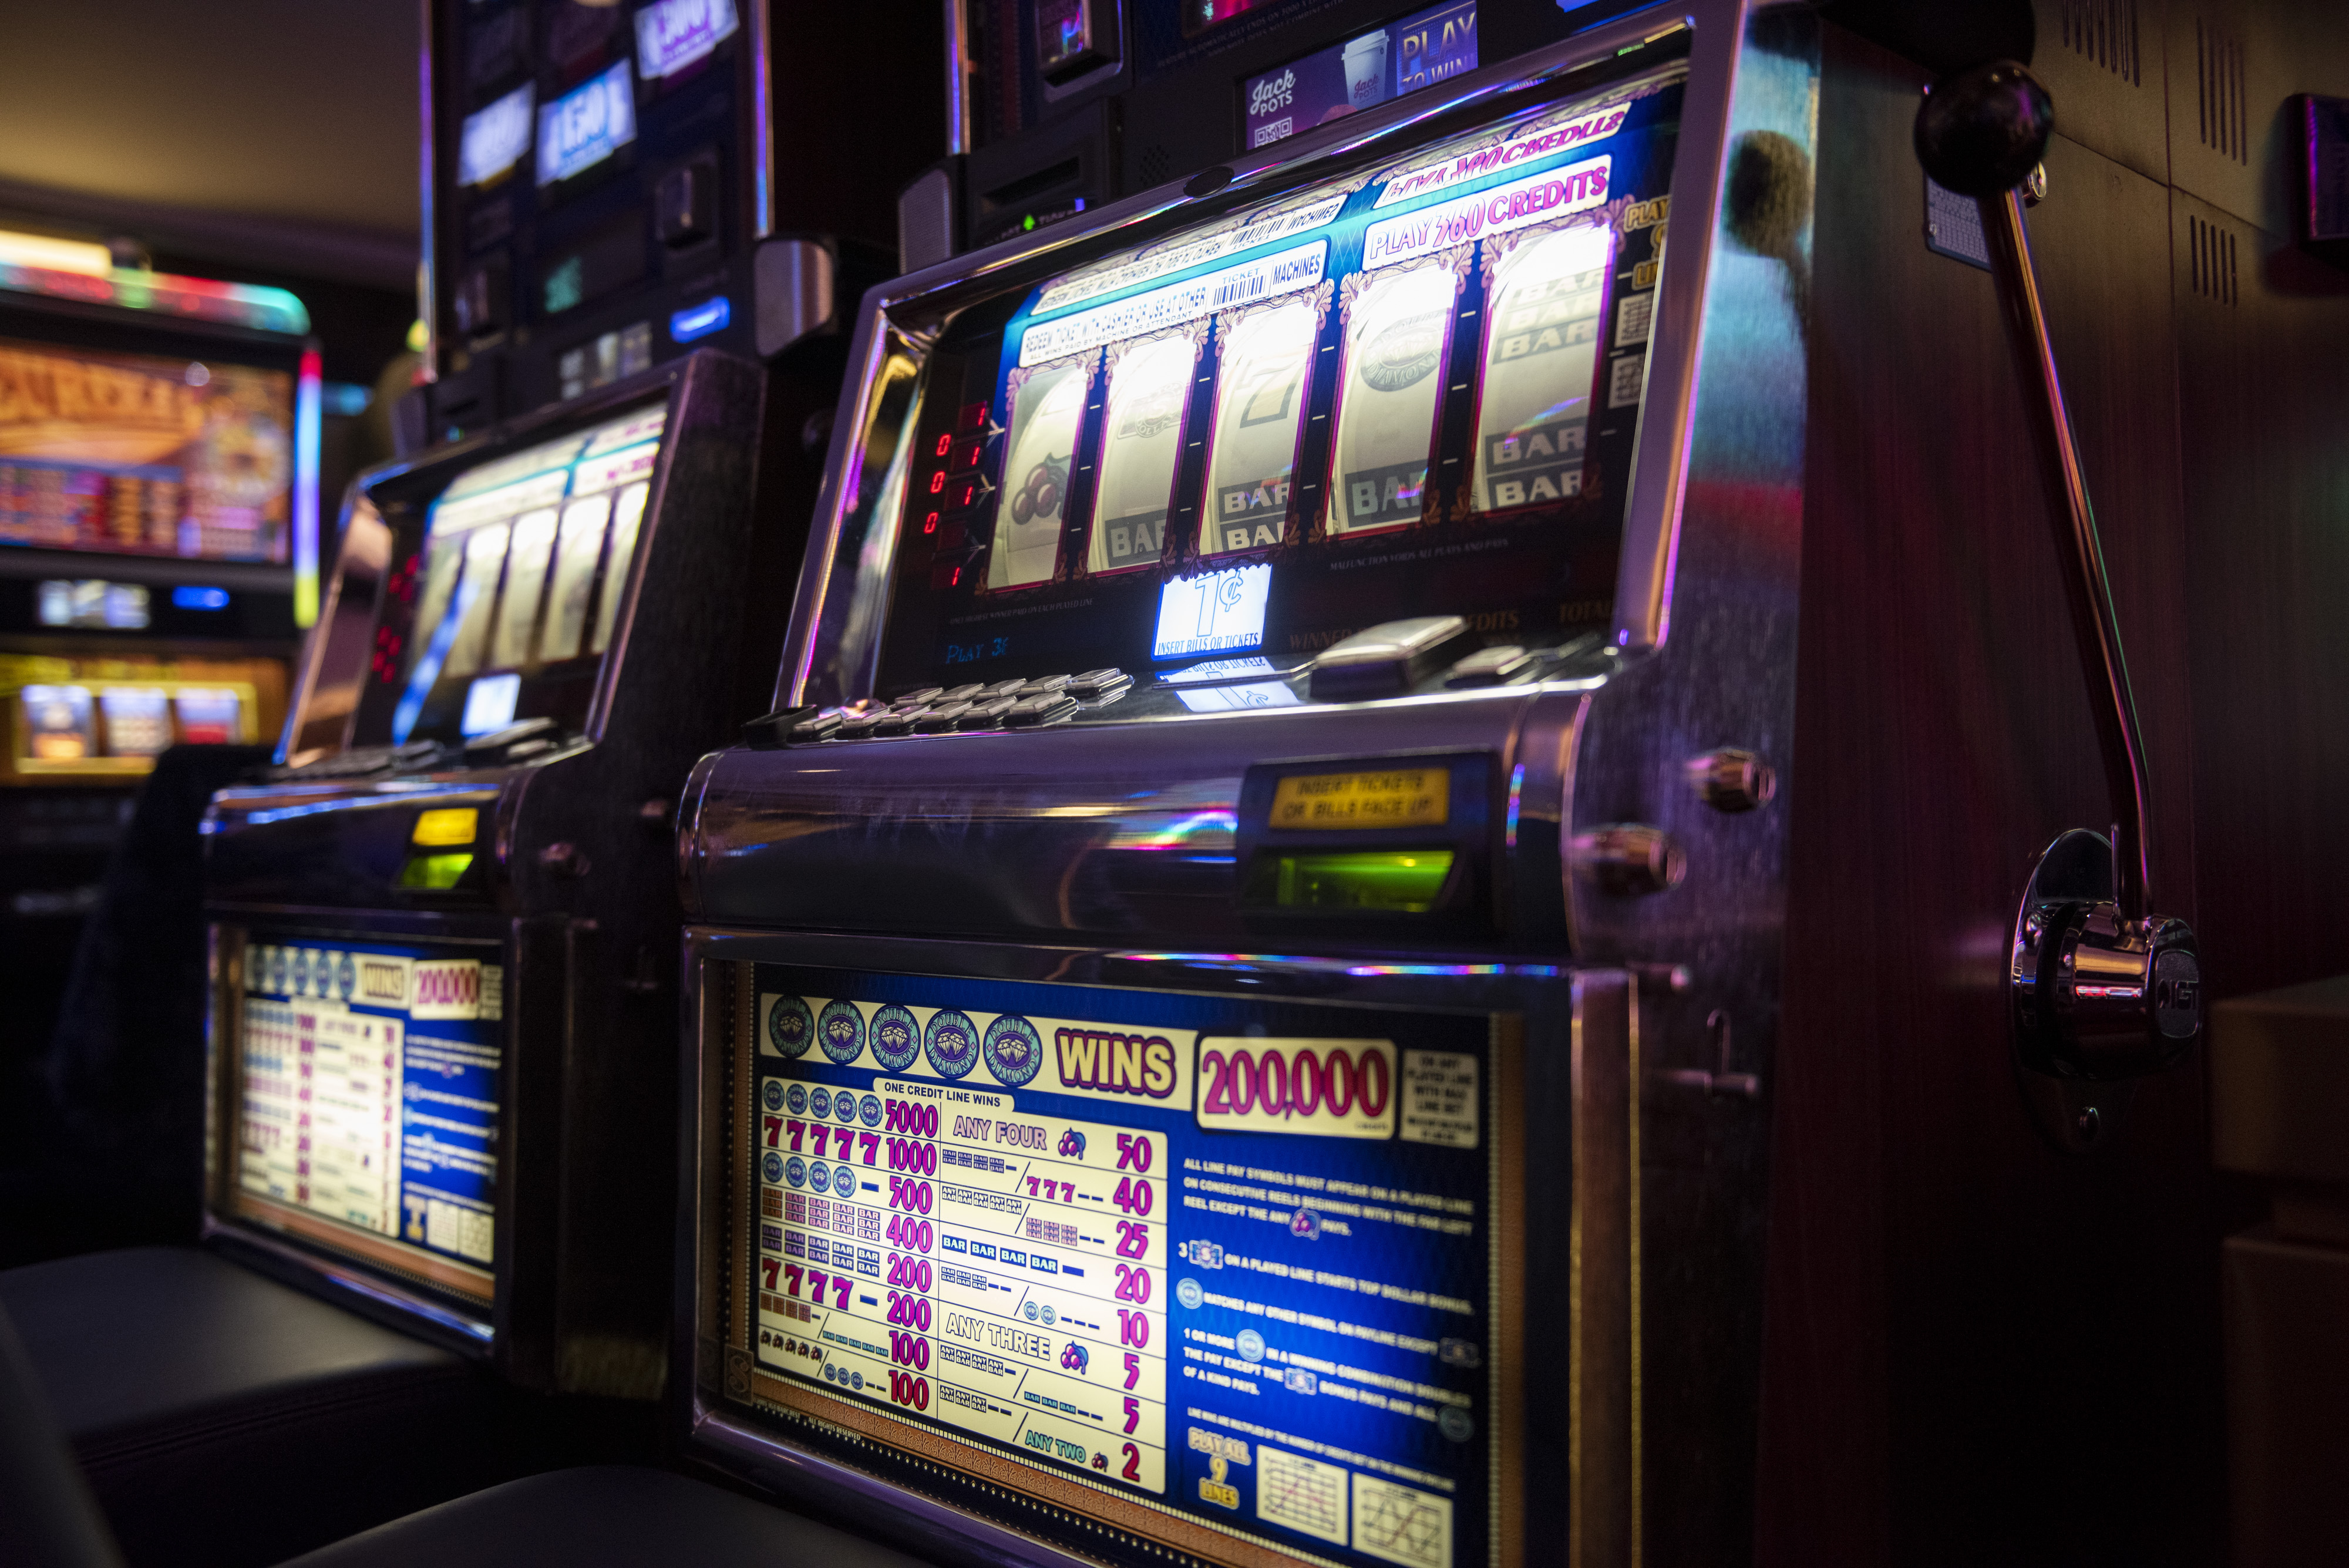 Pemenang jackpot kasino harus siap menghadapi konsekuensi pajak IRS